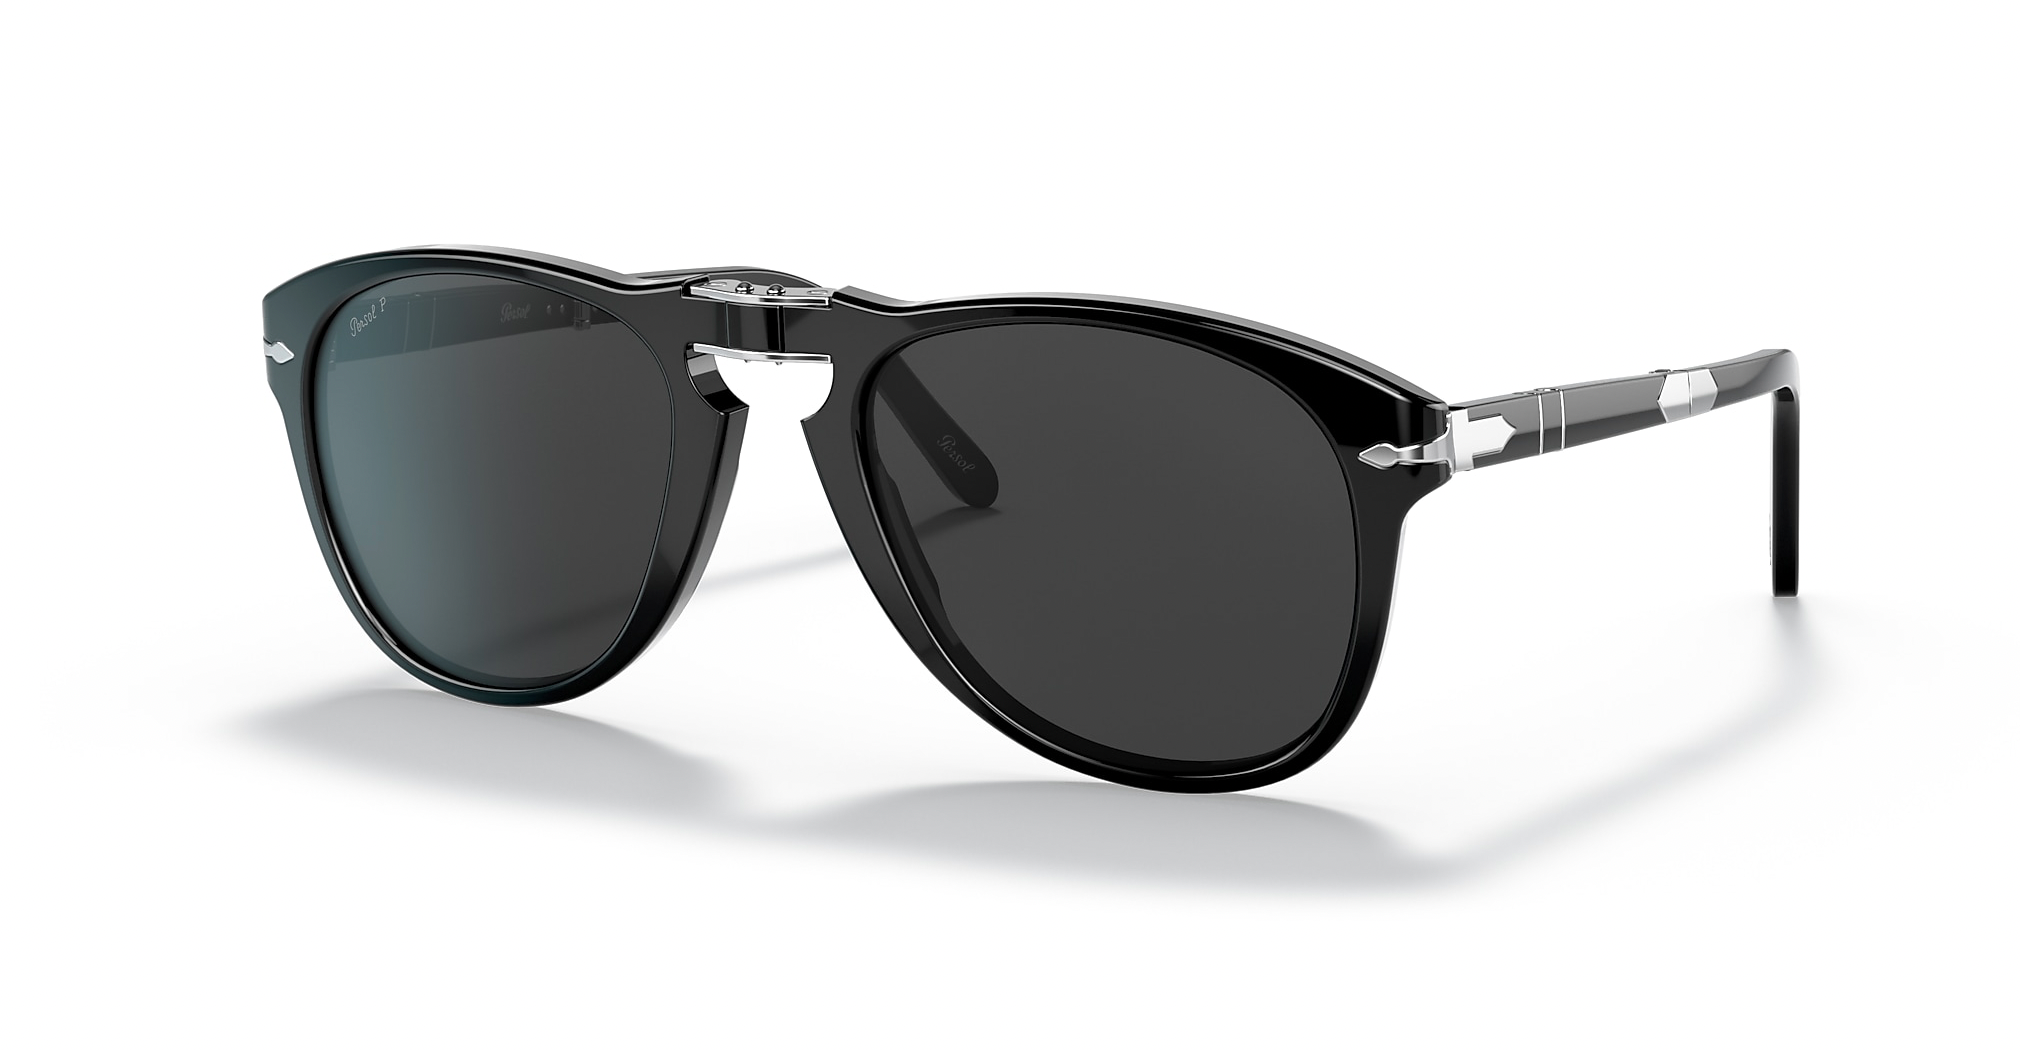 Persol Steve McQueen 714SM Sunglasses